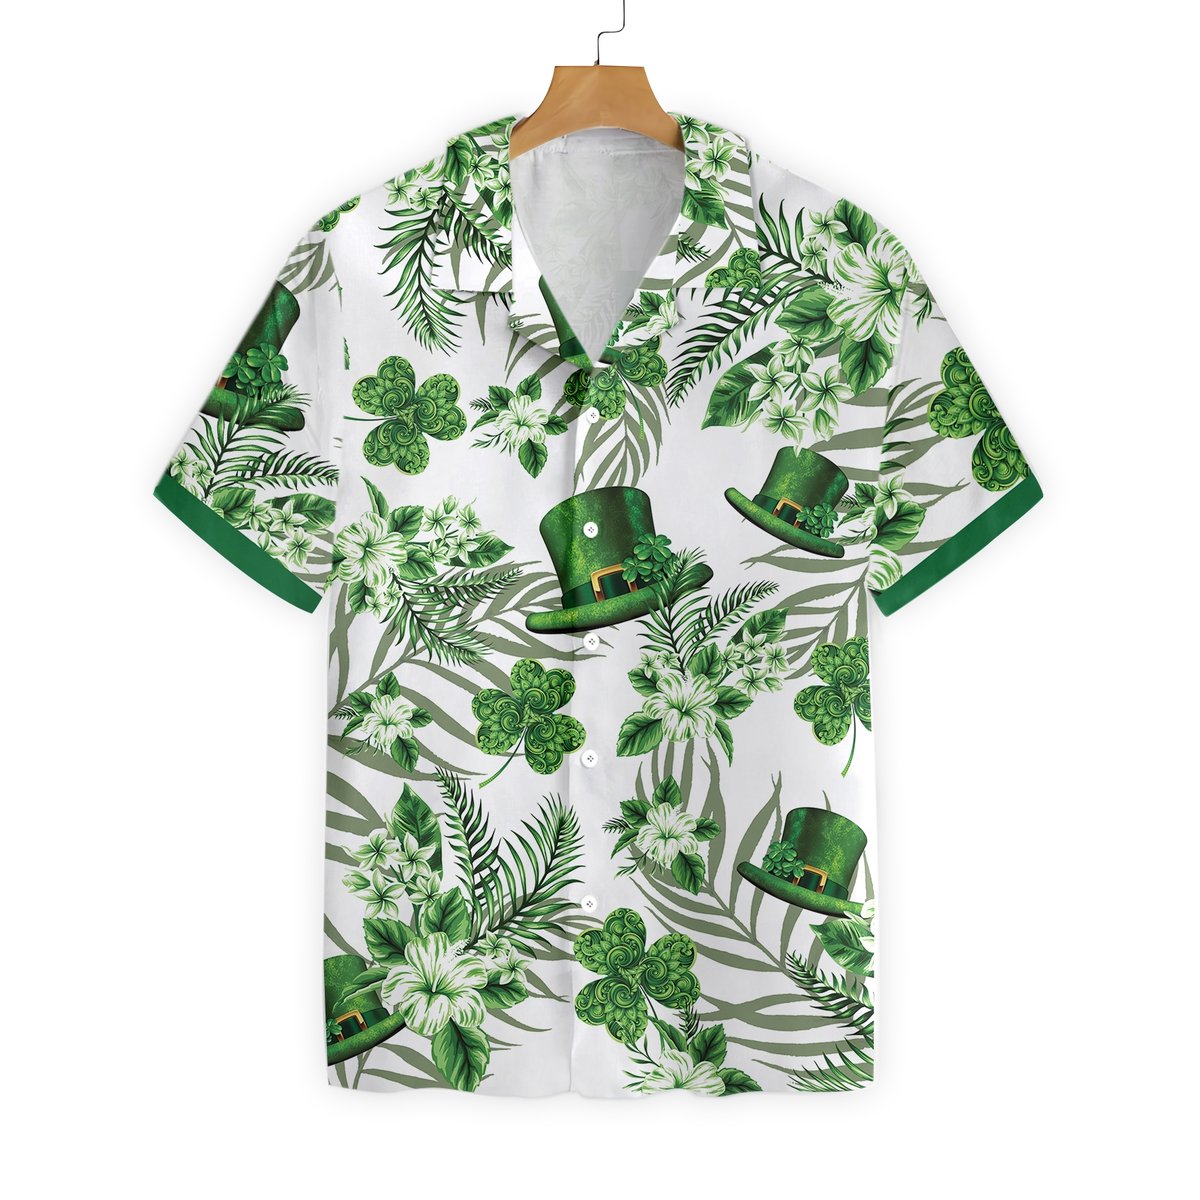 Erin Go Braugh Ireland Green Hat and Shamrock Pattern Hawaiian Shirt 1 1